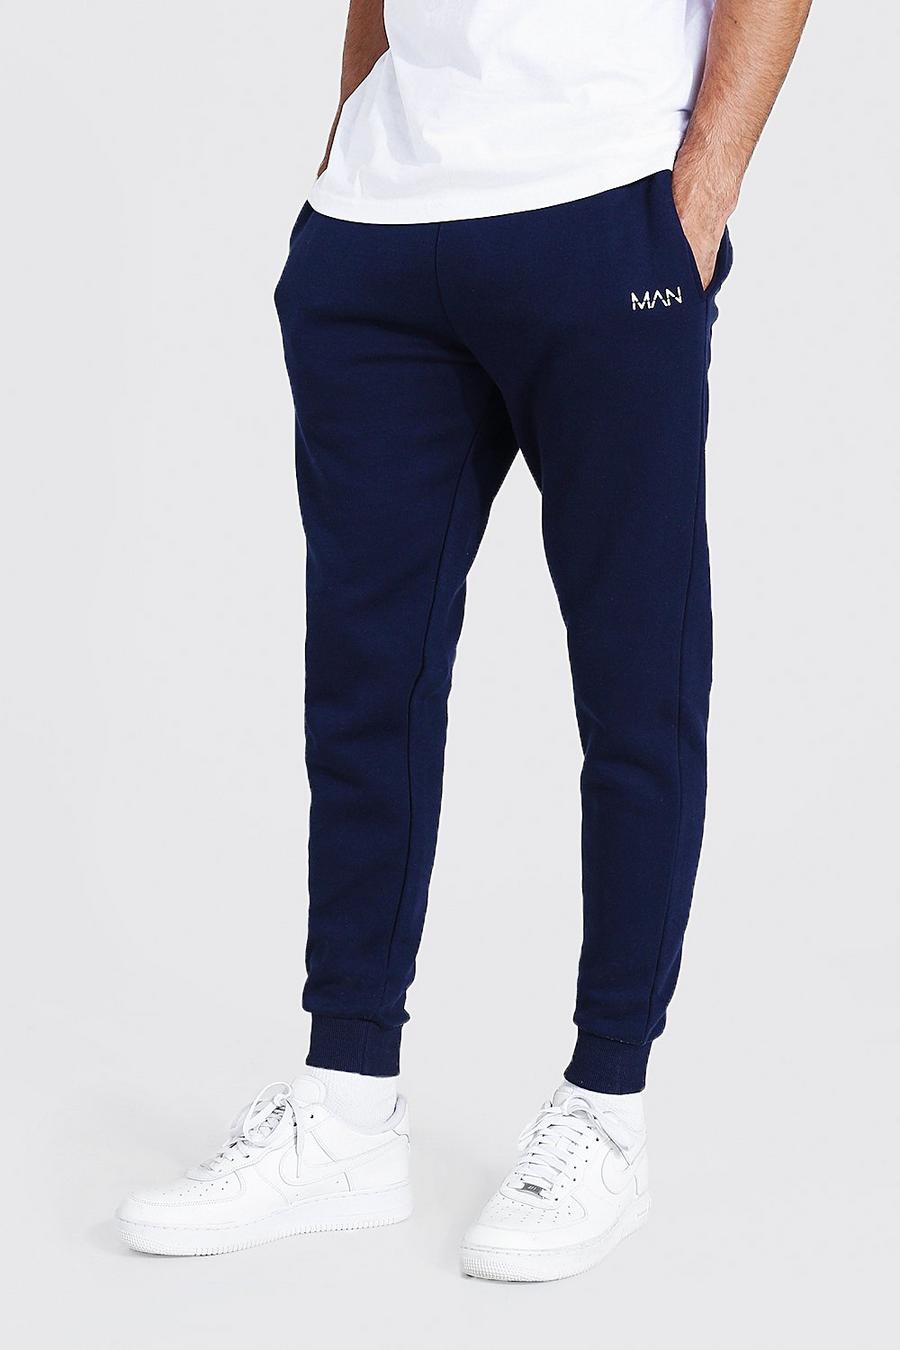 Pantalones de deporte Slim Fit s Original Man, Azul marino image number 1